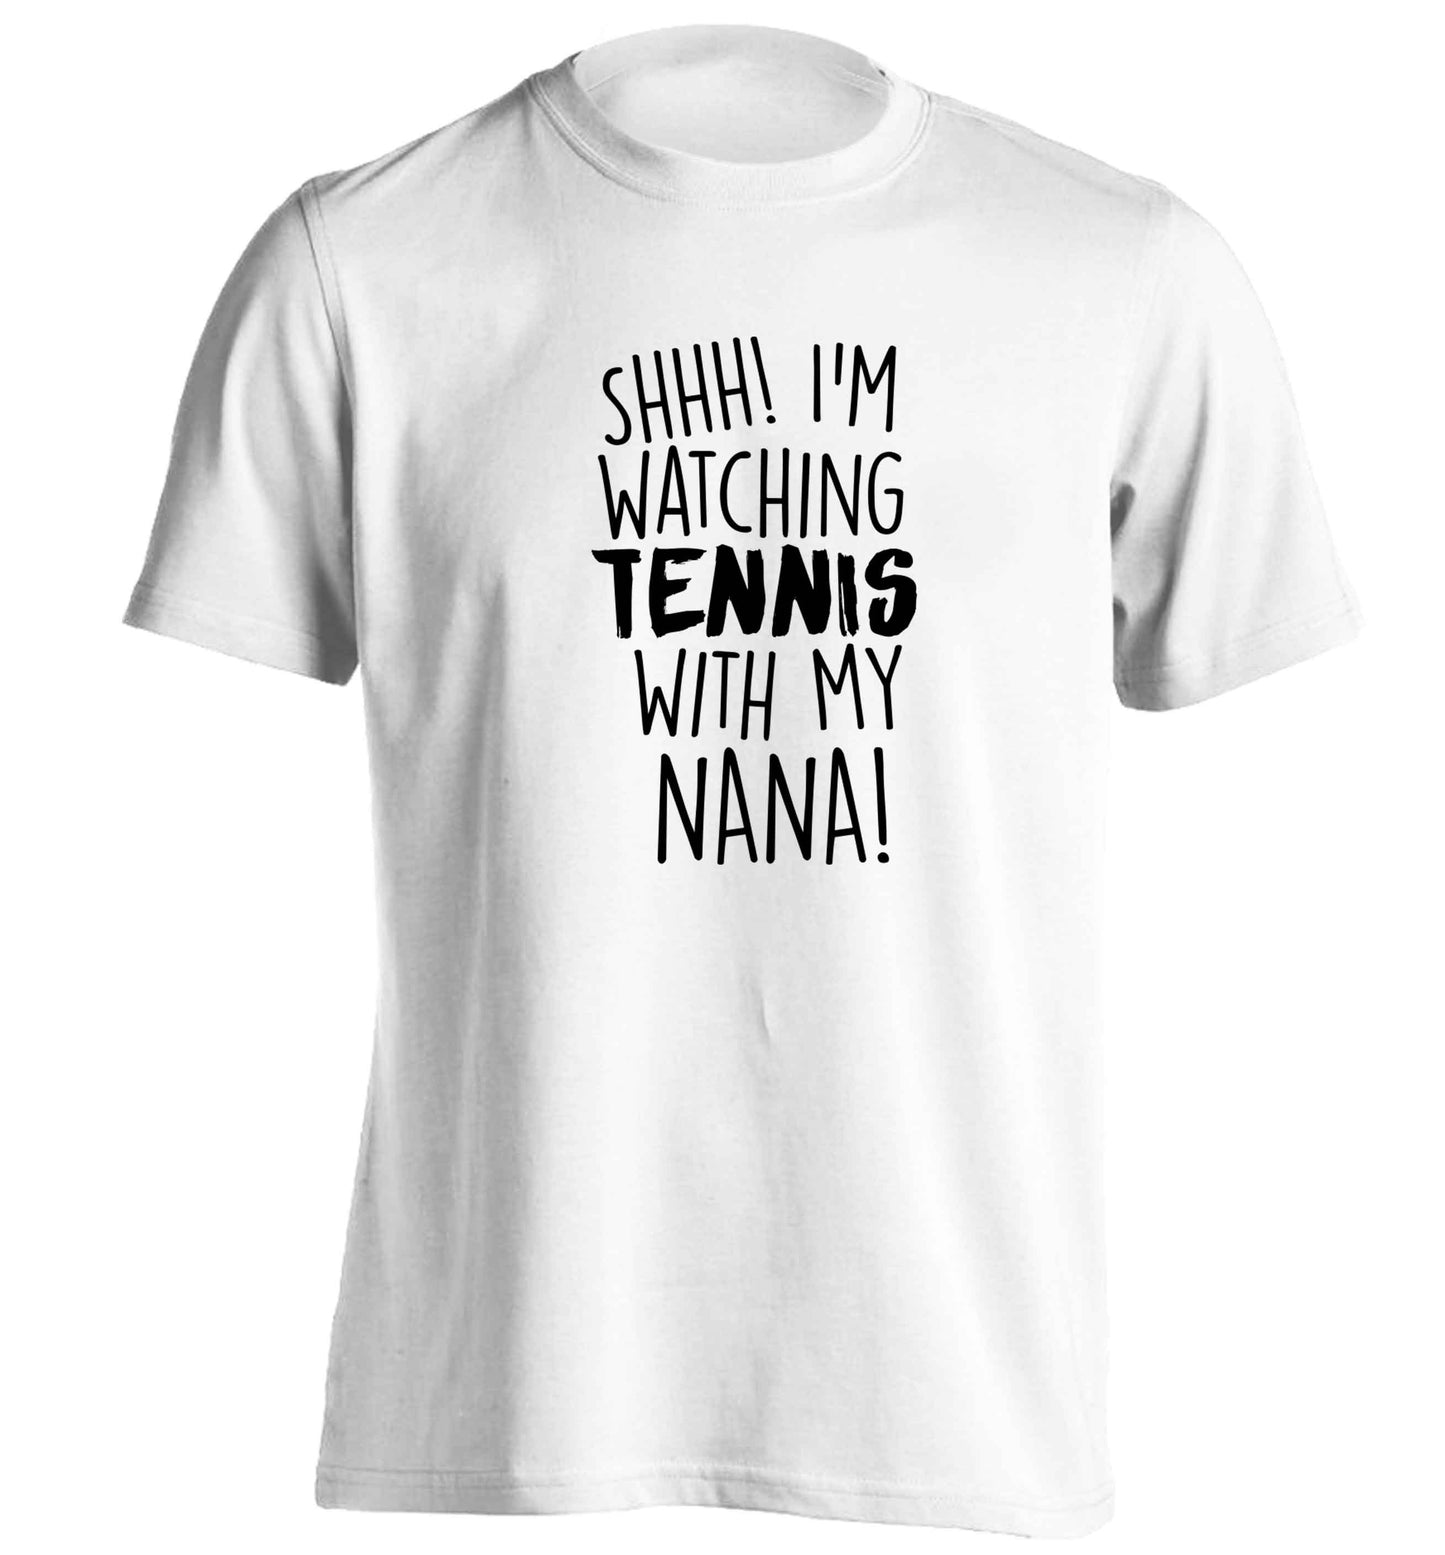 Shh! I'm watching tennis with my nana! adults unisex white Tshirt 2XL